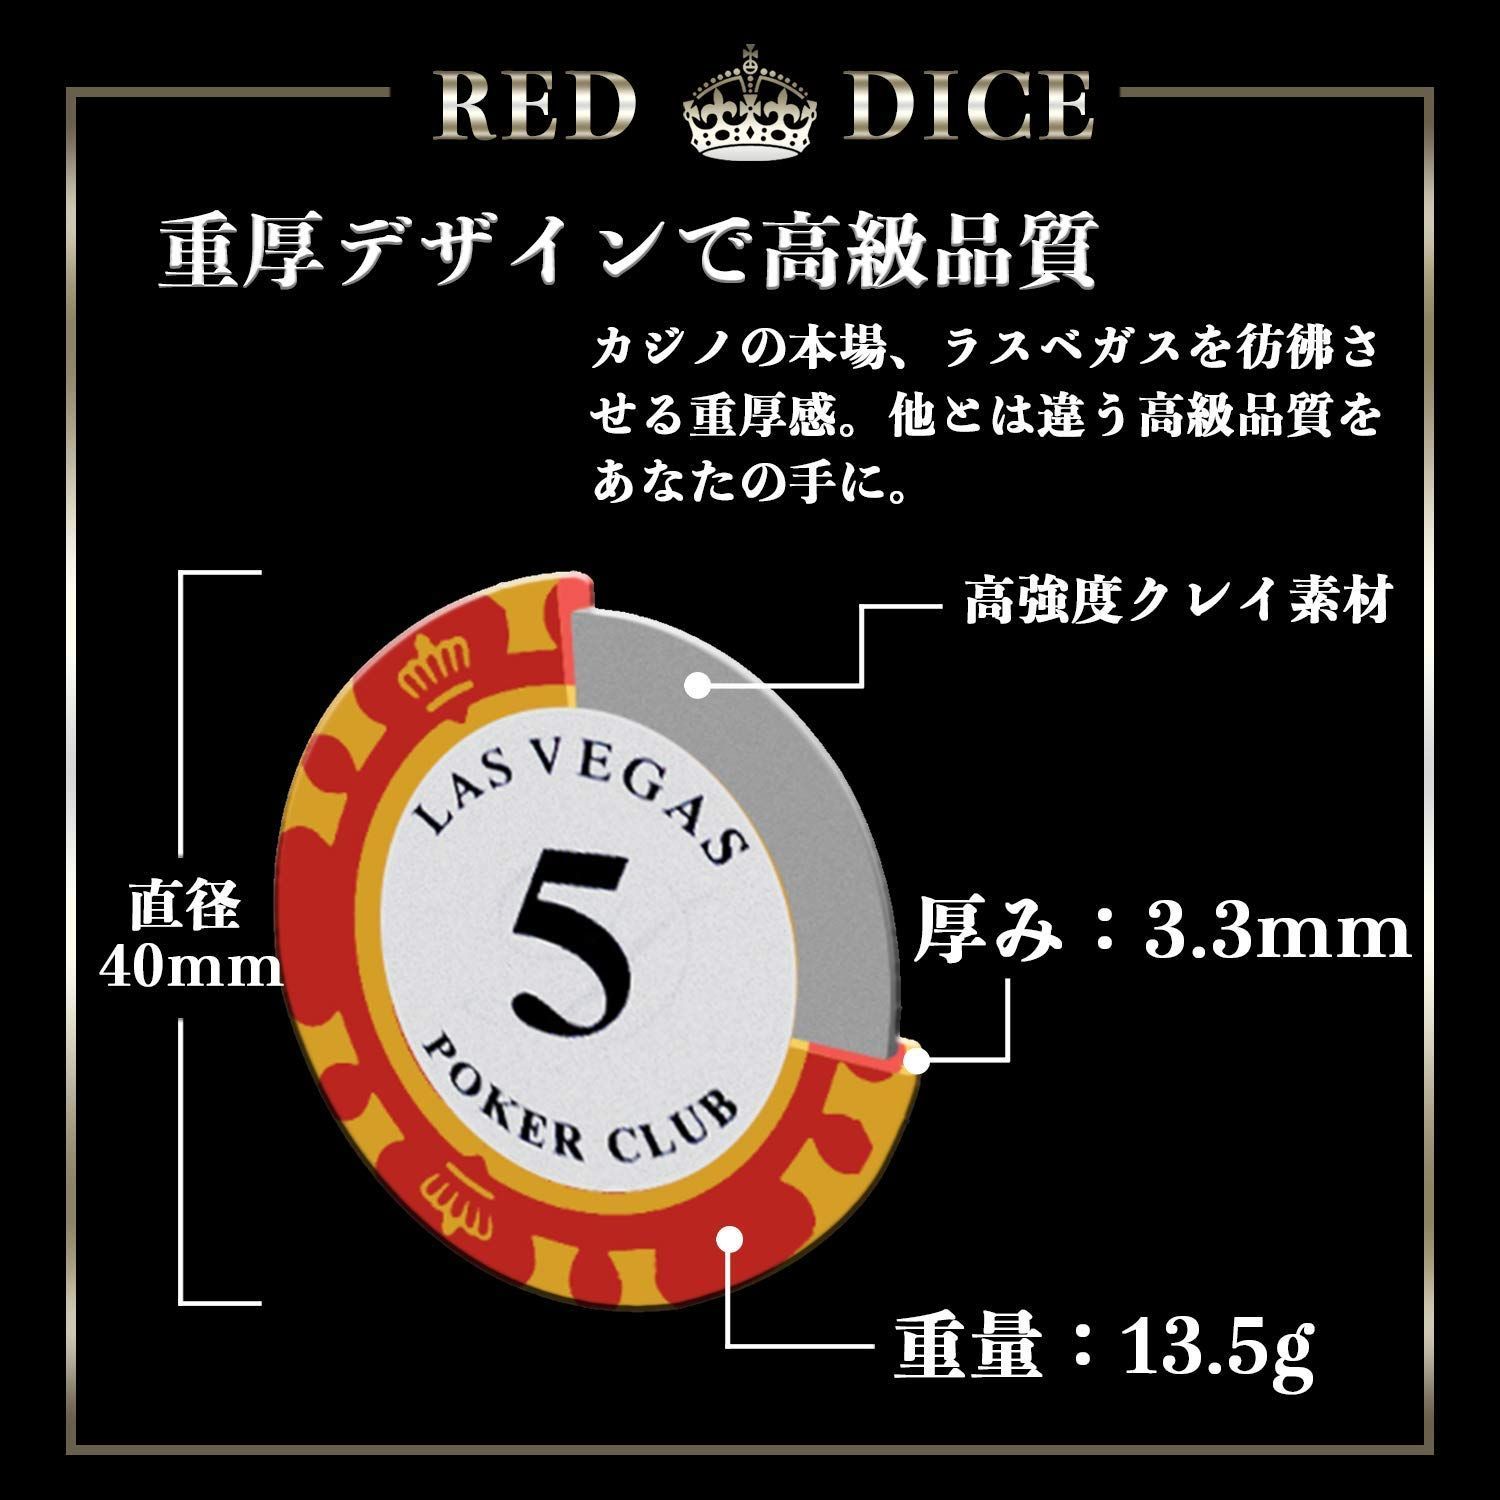 Red Dice 本格 カジノチップ プロ仕様 100枚セット(10種類×10枚) 専用